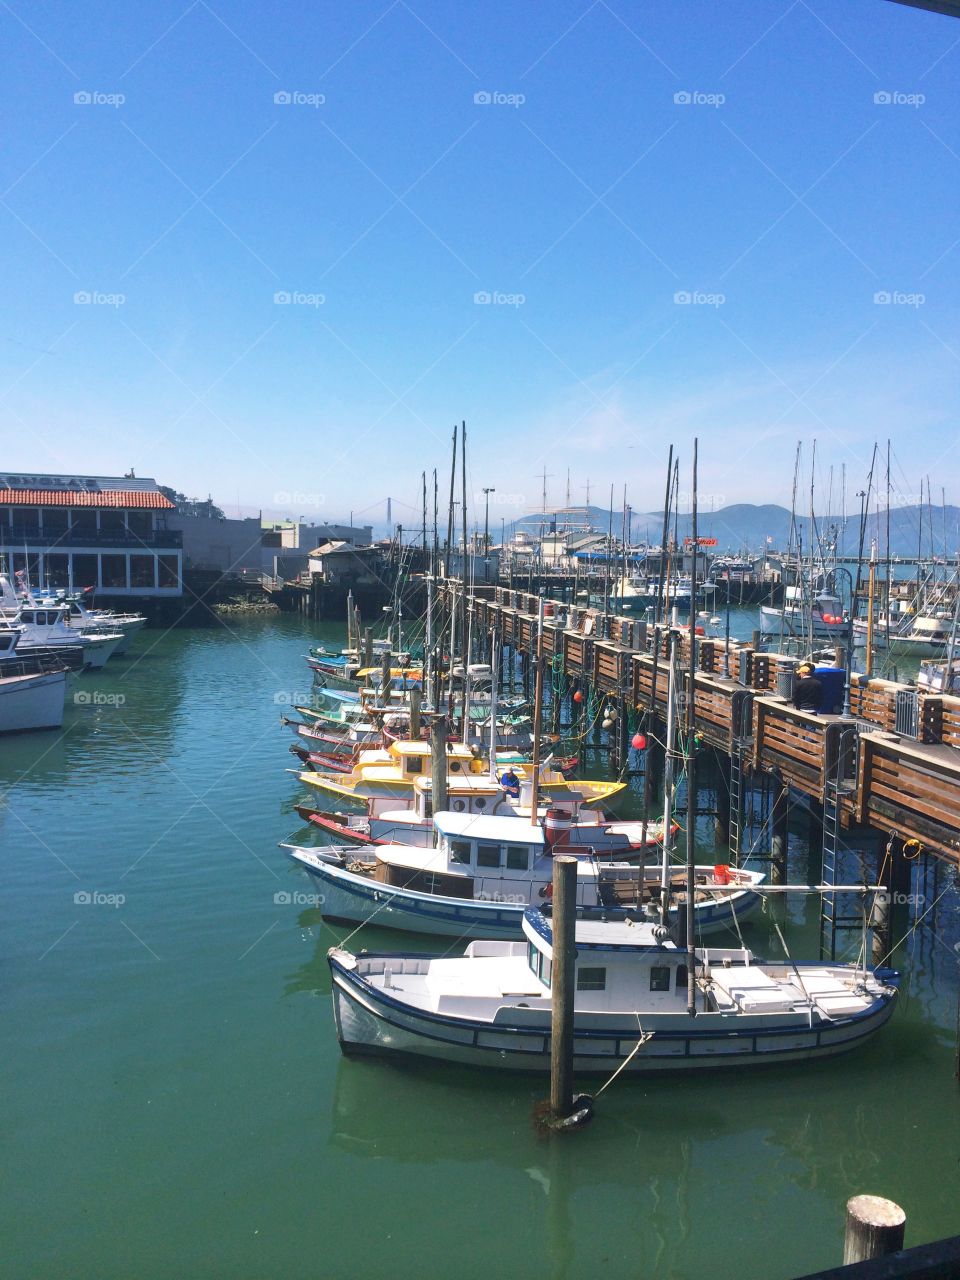 Sailboats in the San Francisco Marina. Sailboats docked in the San Francisco marina with the Golden Gate Bridge in the distance. 